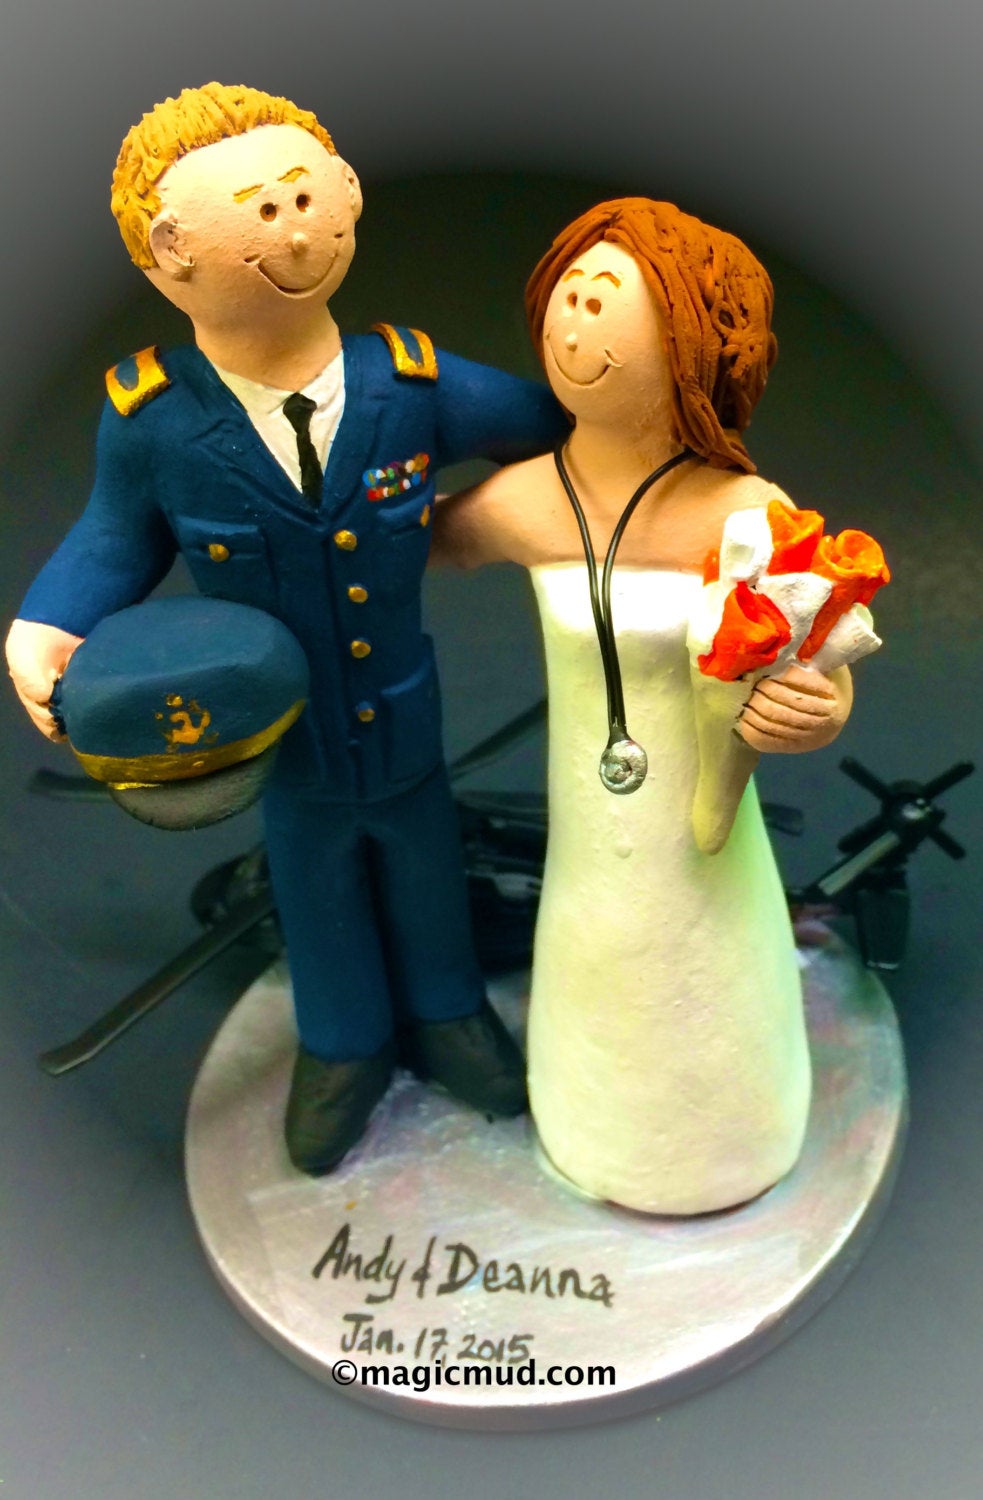 Dress Blues Military Uniform Wedding Cake Topper, Blackhawk Helicopter Pilot Wedding Cake Topper, Air Force Pilot's Wedding Cake Topper - iWeddingCakeToppers